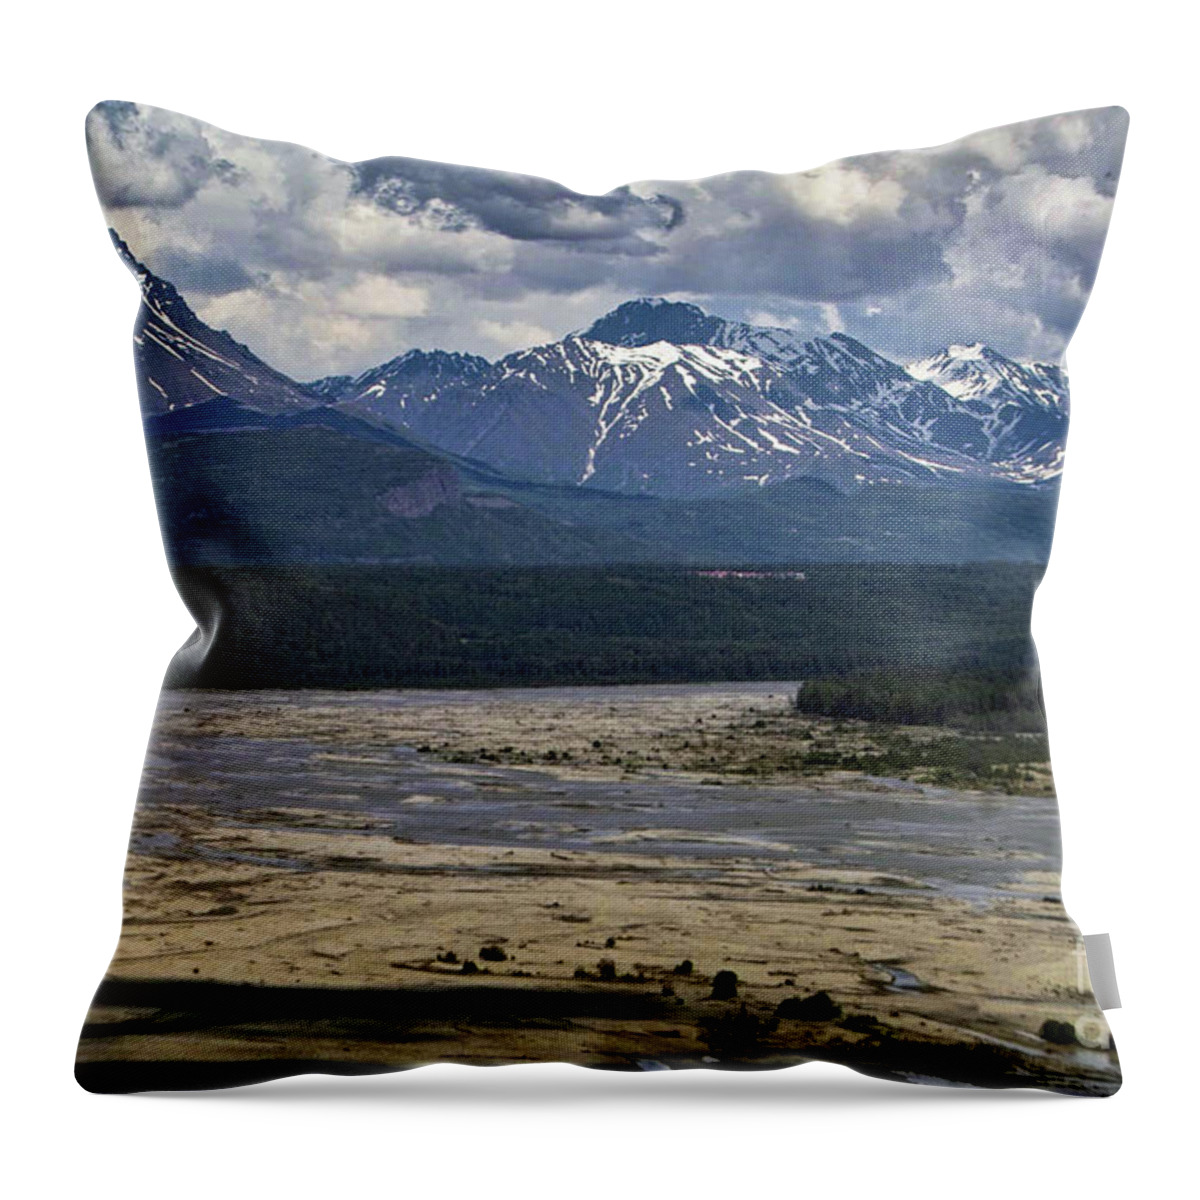 Matanuska Throw Pillow featuring the photograph Matanuska River and Mountains #1 by Kimberly Blom-Roemer